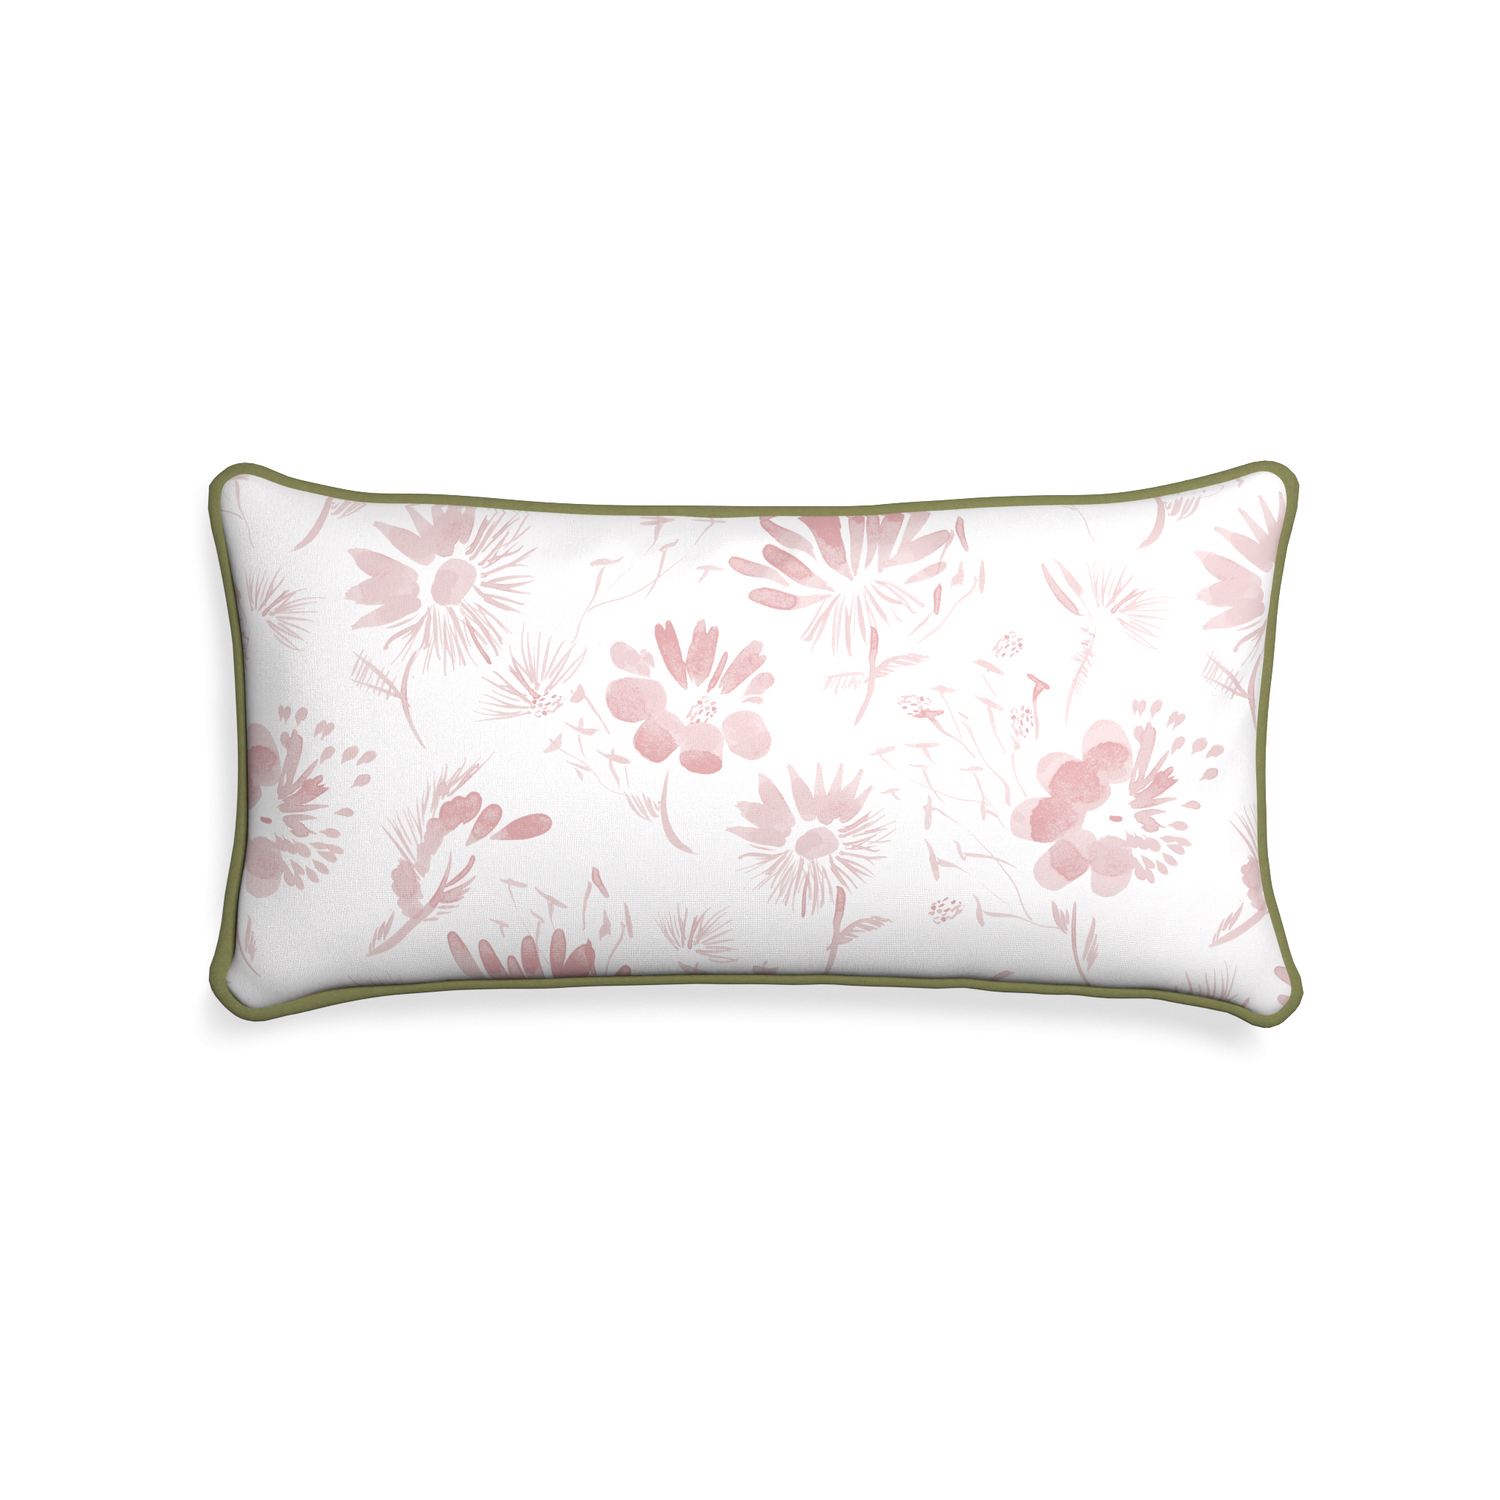 Midi-lumbar blake custom pink floralpillow with moss piping on white background